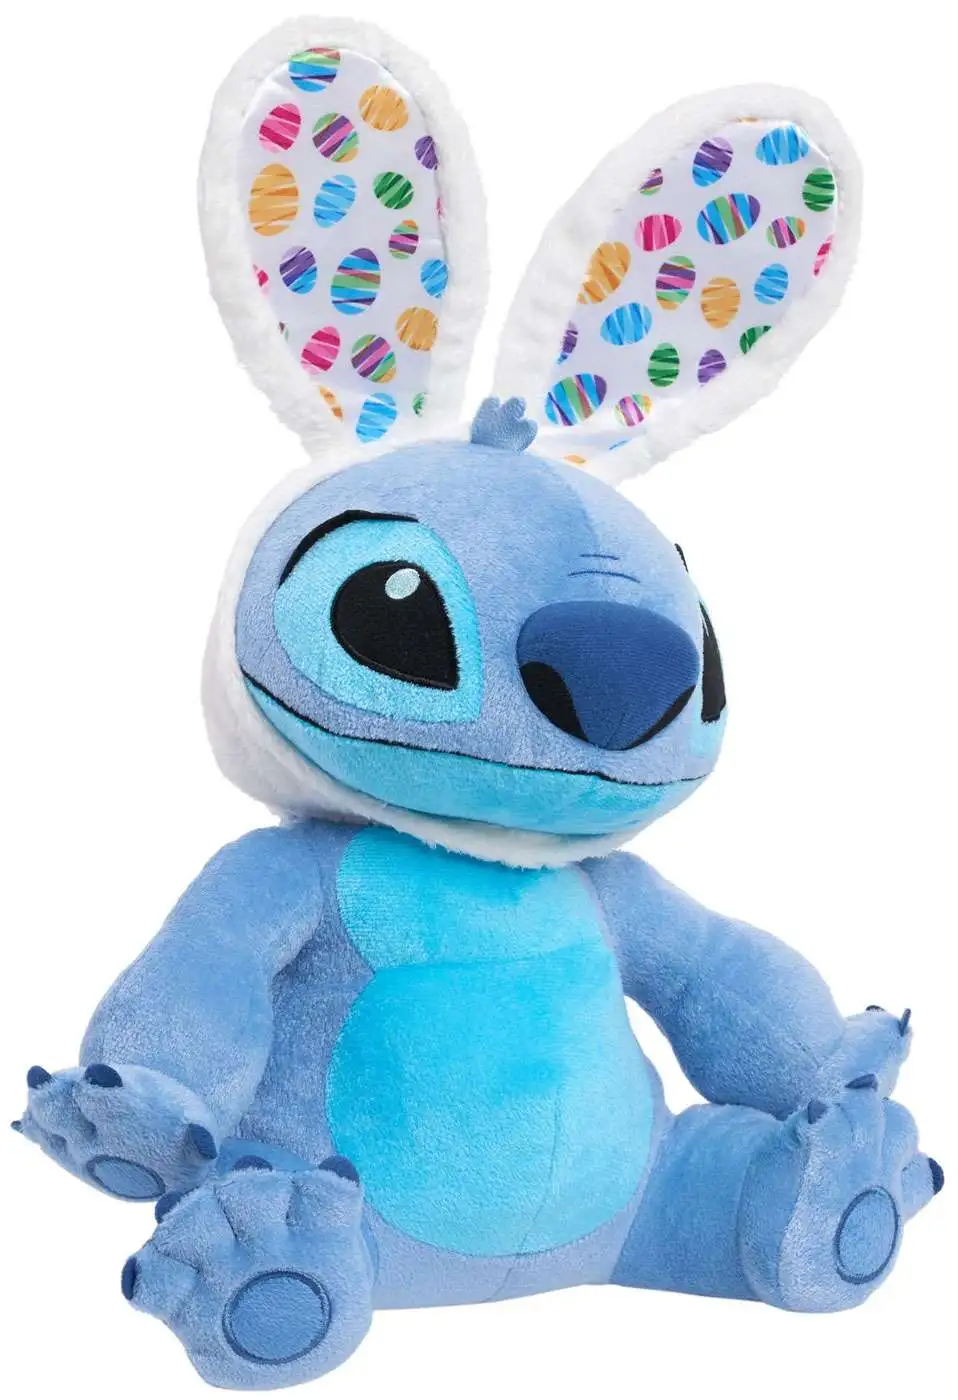 New w/ Tags! Soft & Adorable Disney Lilo & Stitch 10.5" Plush 